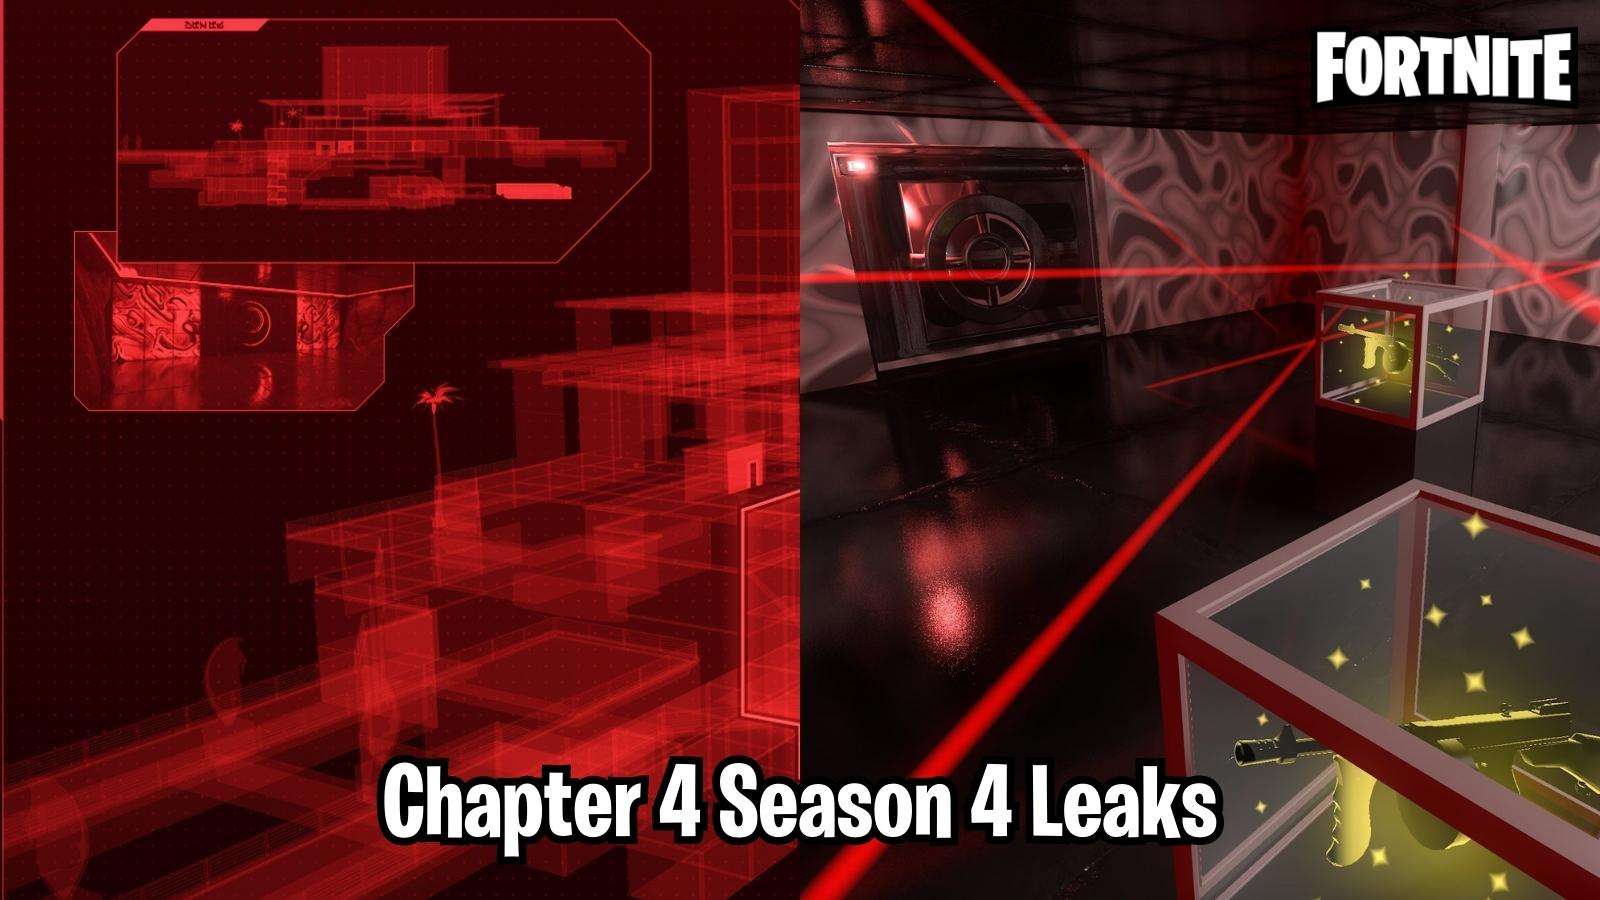 Chapter 4 Season 4 heist theme Fortnite